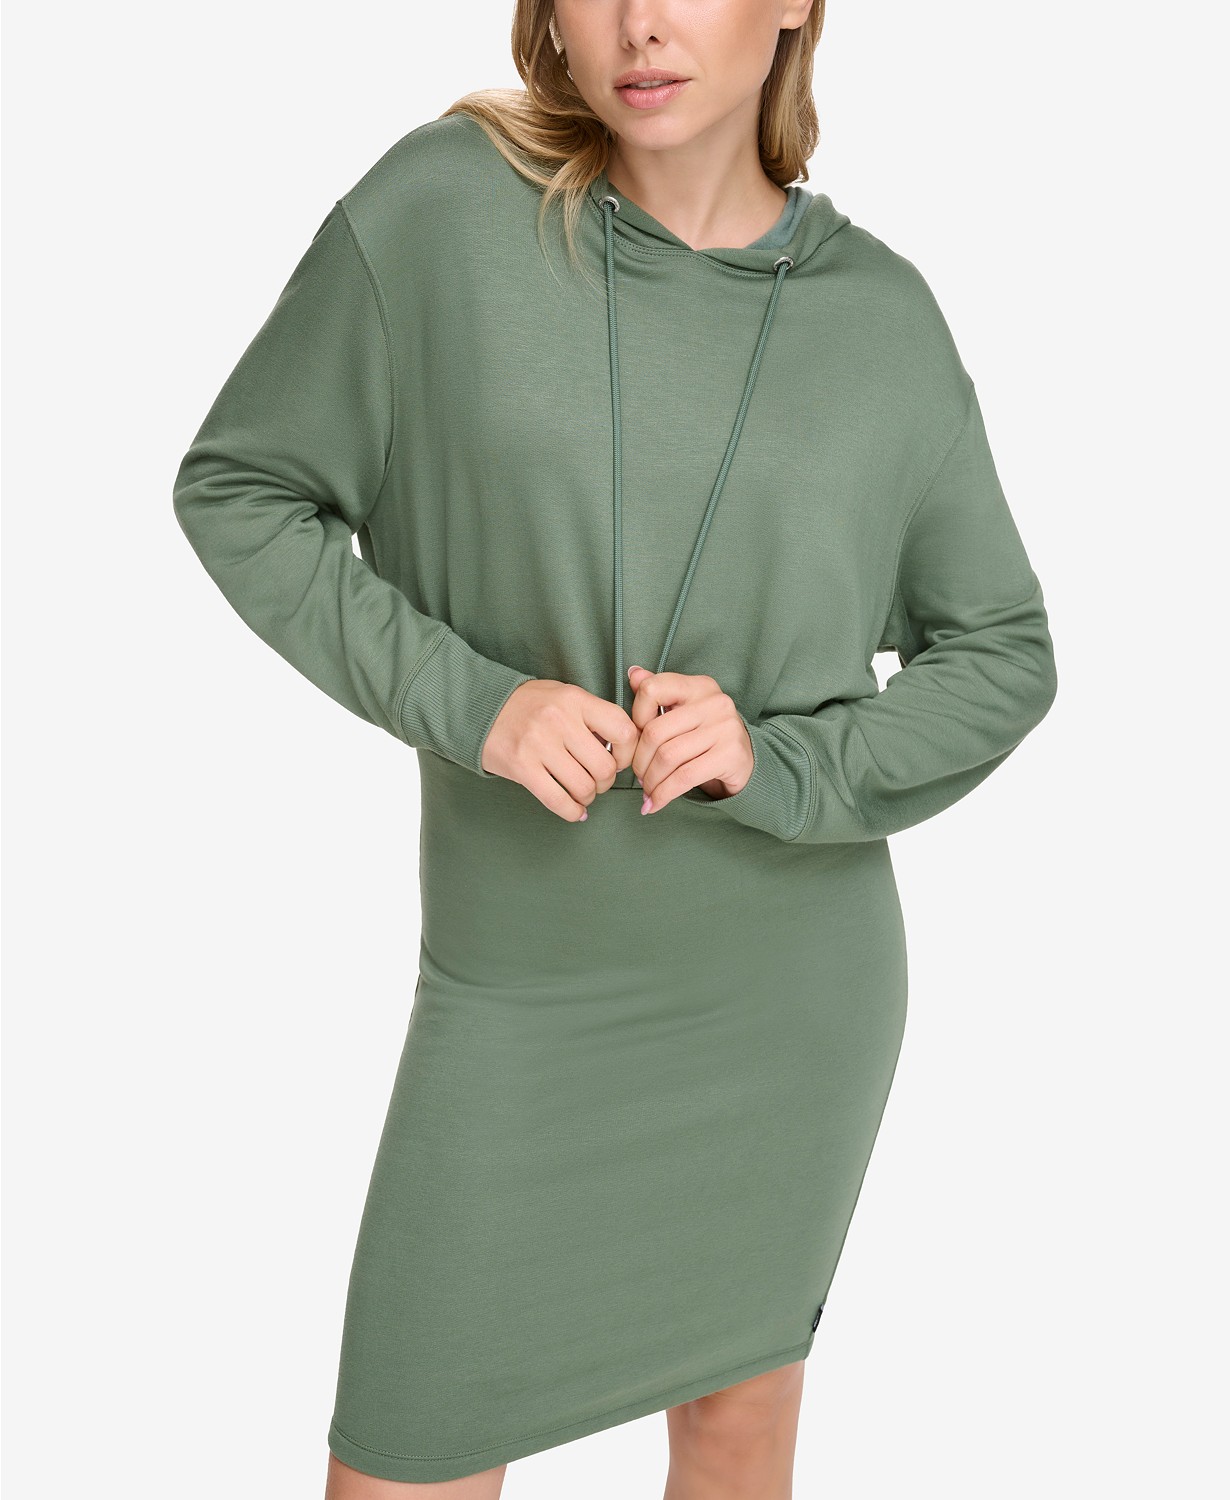 DKNY Womens Long-Sleeve Hoodie Dress